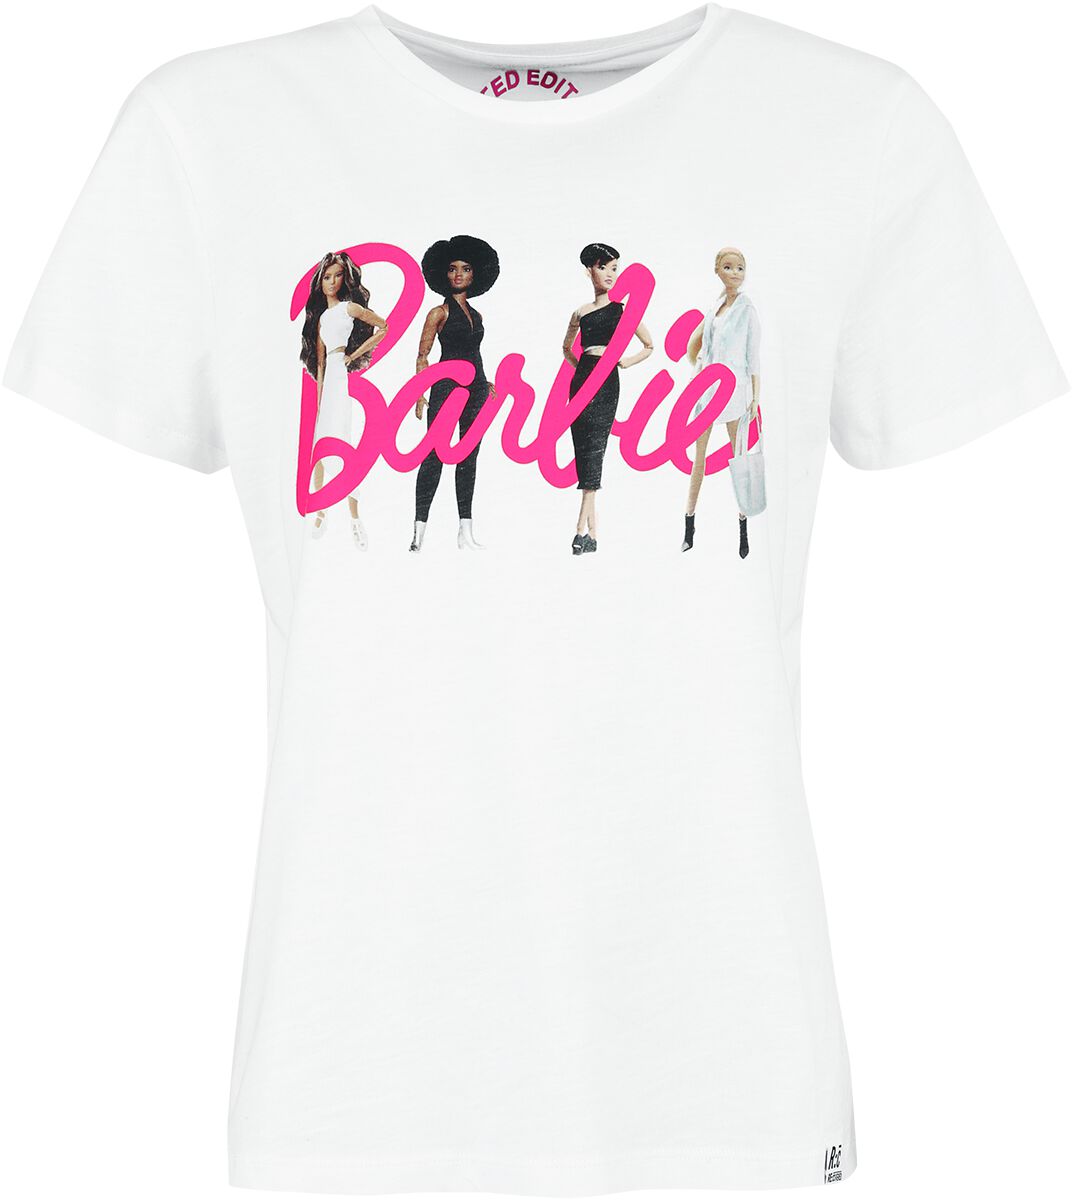 T-Shirt Manches courtes de Barbie - Re:Covered - Here Come The Girls - S à XXL - pour Femme - blanc